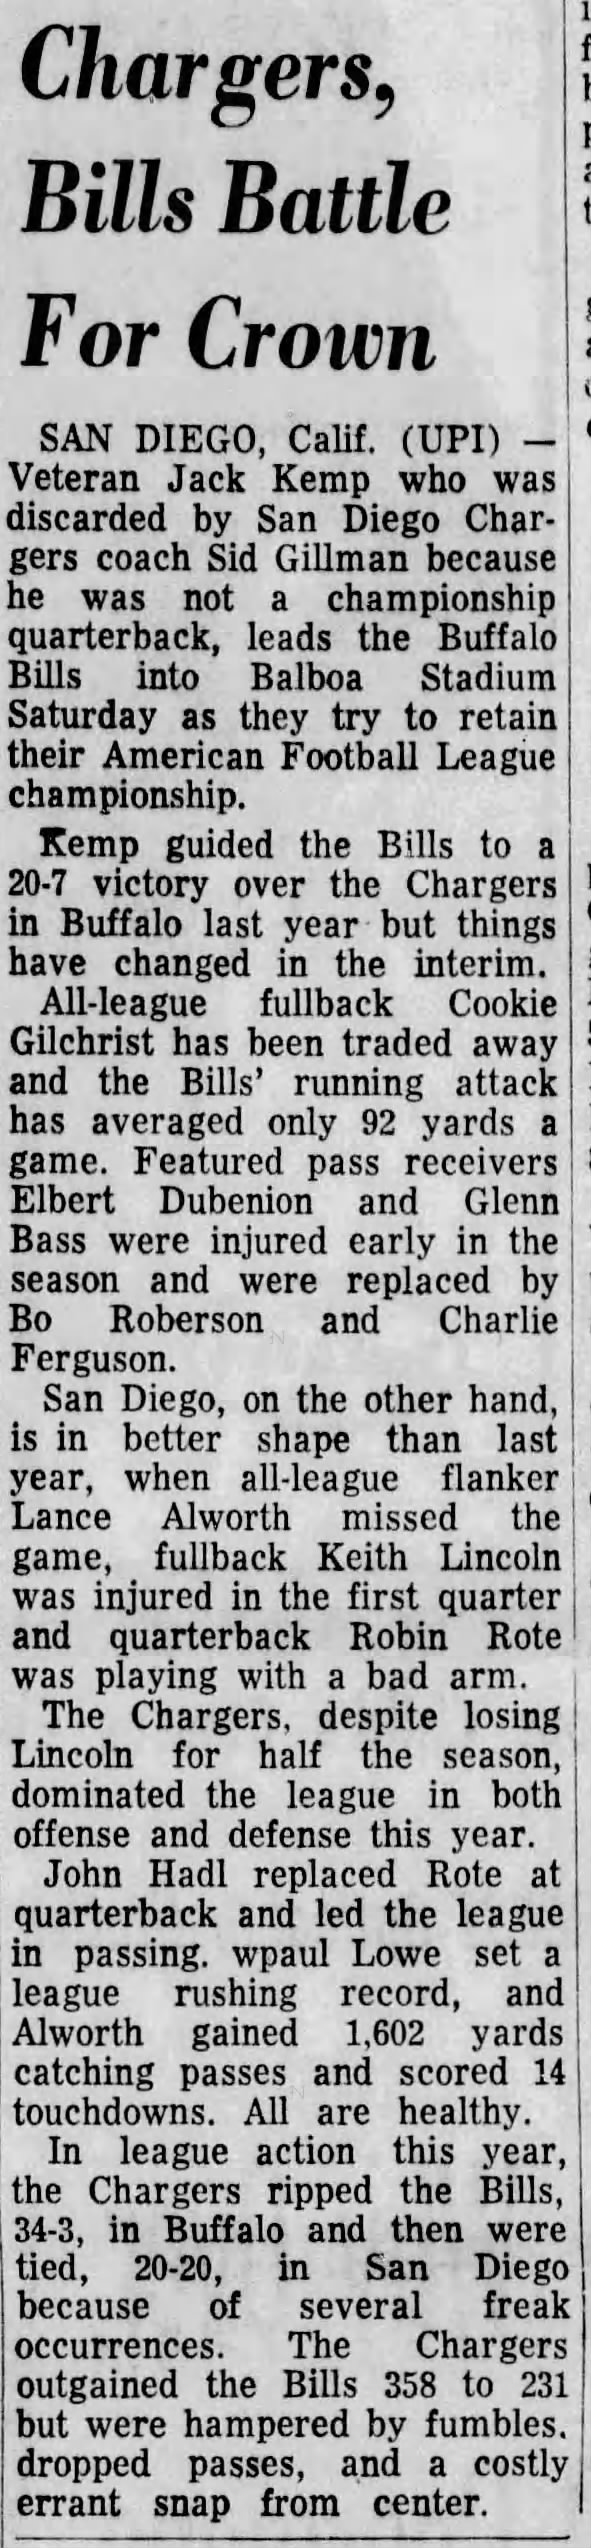 Chargers Bills preview I, 26 Dec 1965